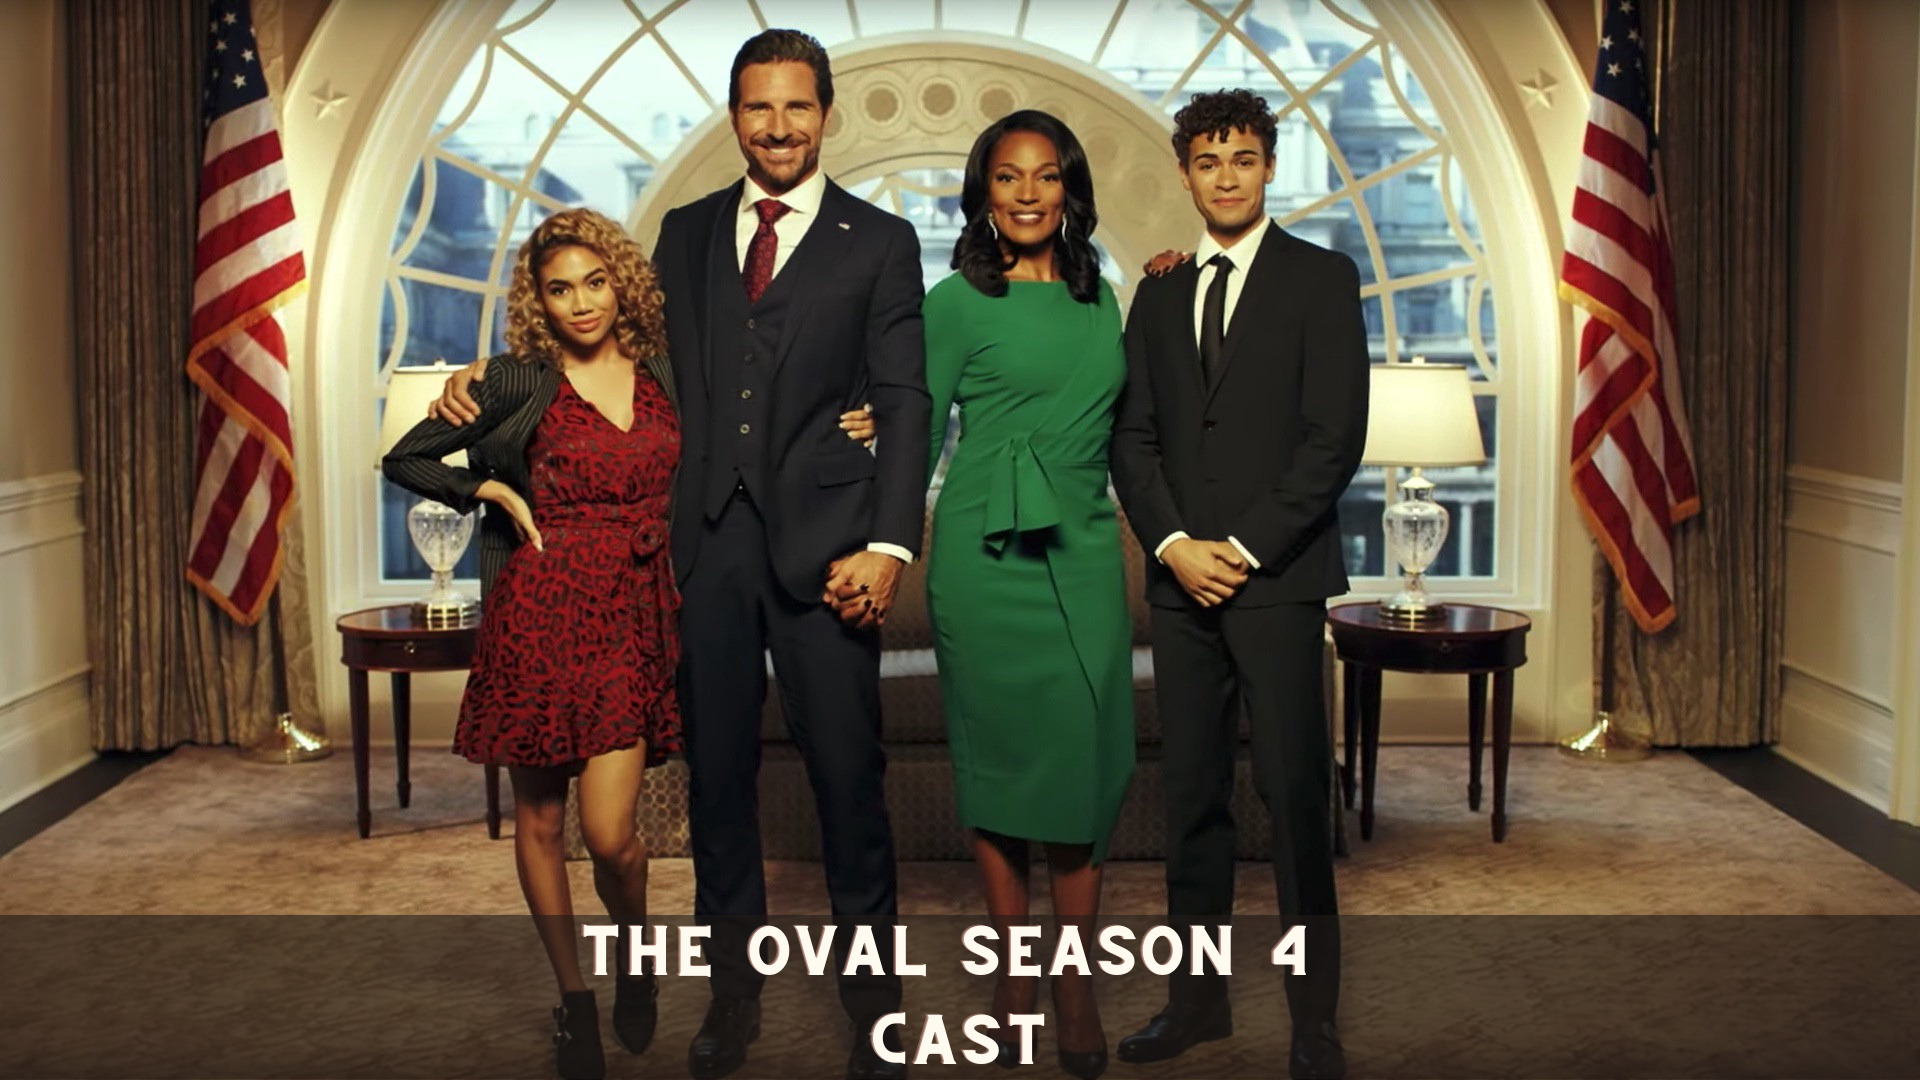 The Oval Season 4 Cast